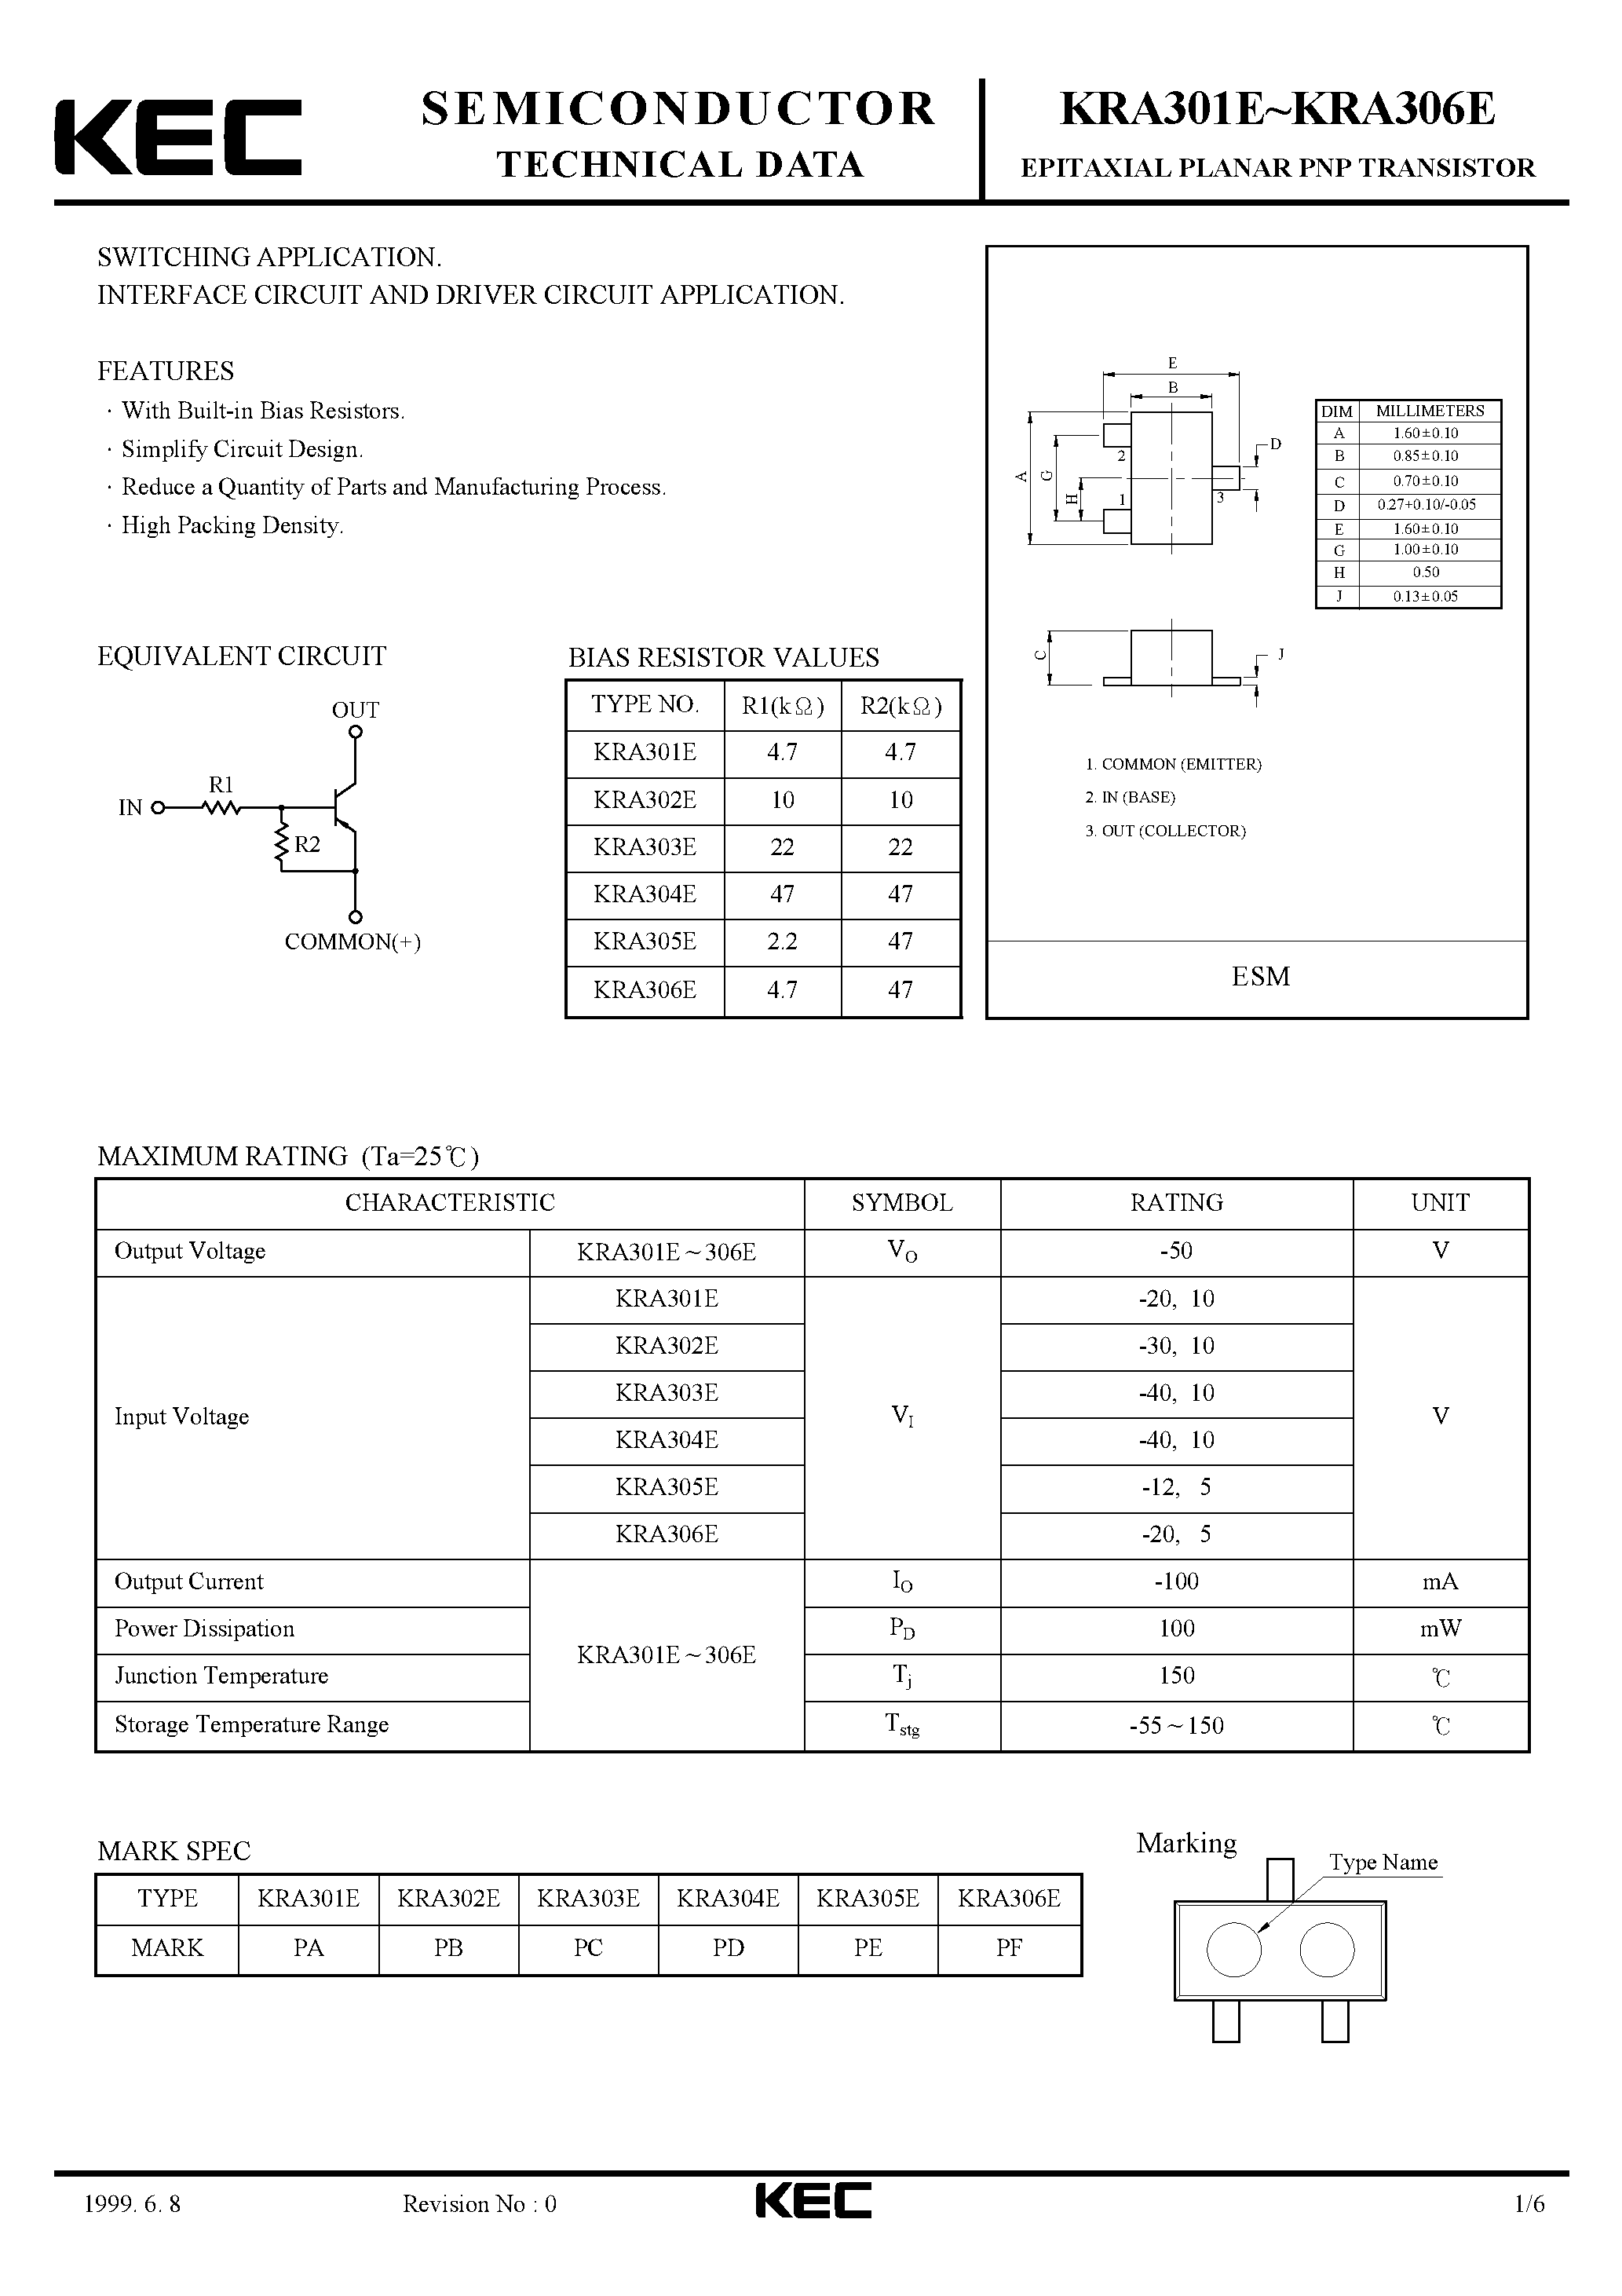 Datasheet KRA301E - (KRA301E - KRA306E) EPITAXIAL PLANAR PNP TRANSISTOR page 1